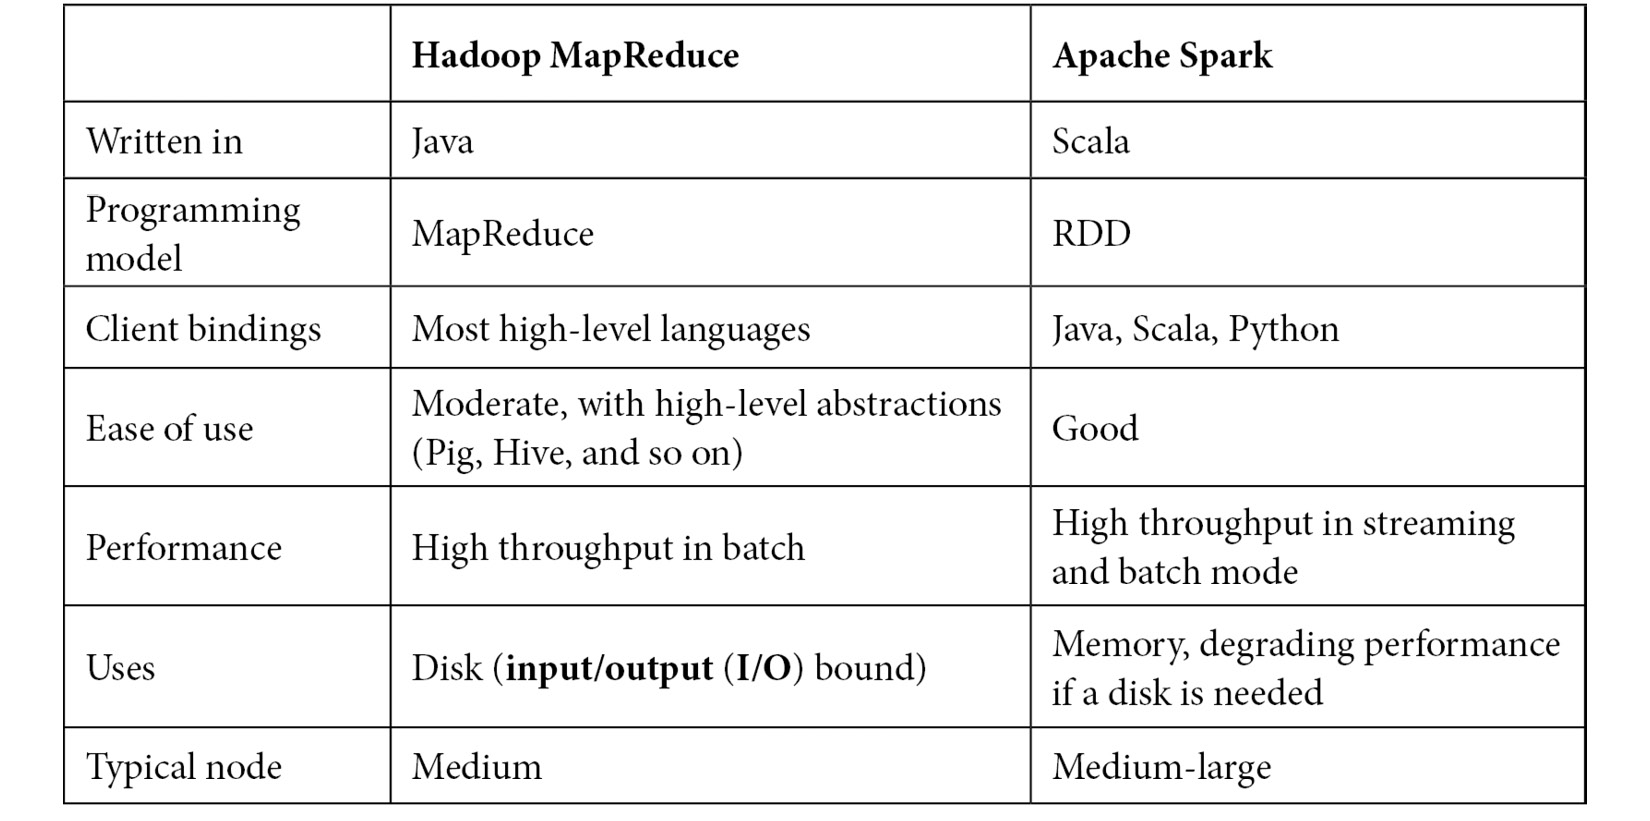 Table 12.1: Apache Spark versus Hadoop MapReduce framework comparison
